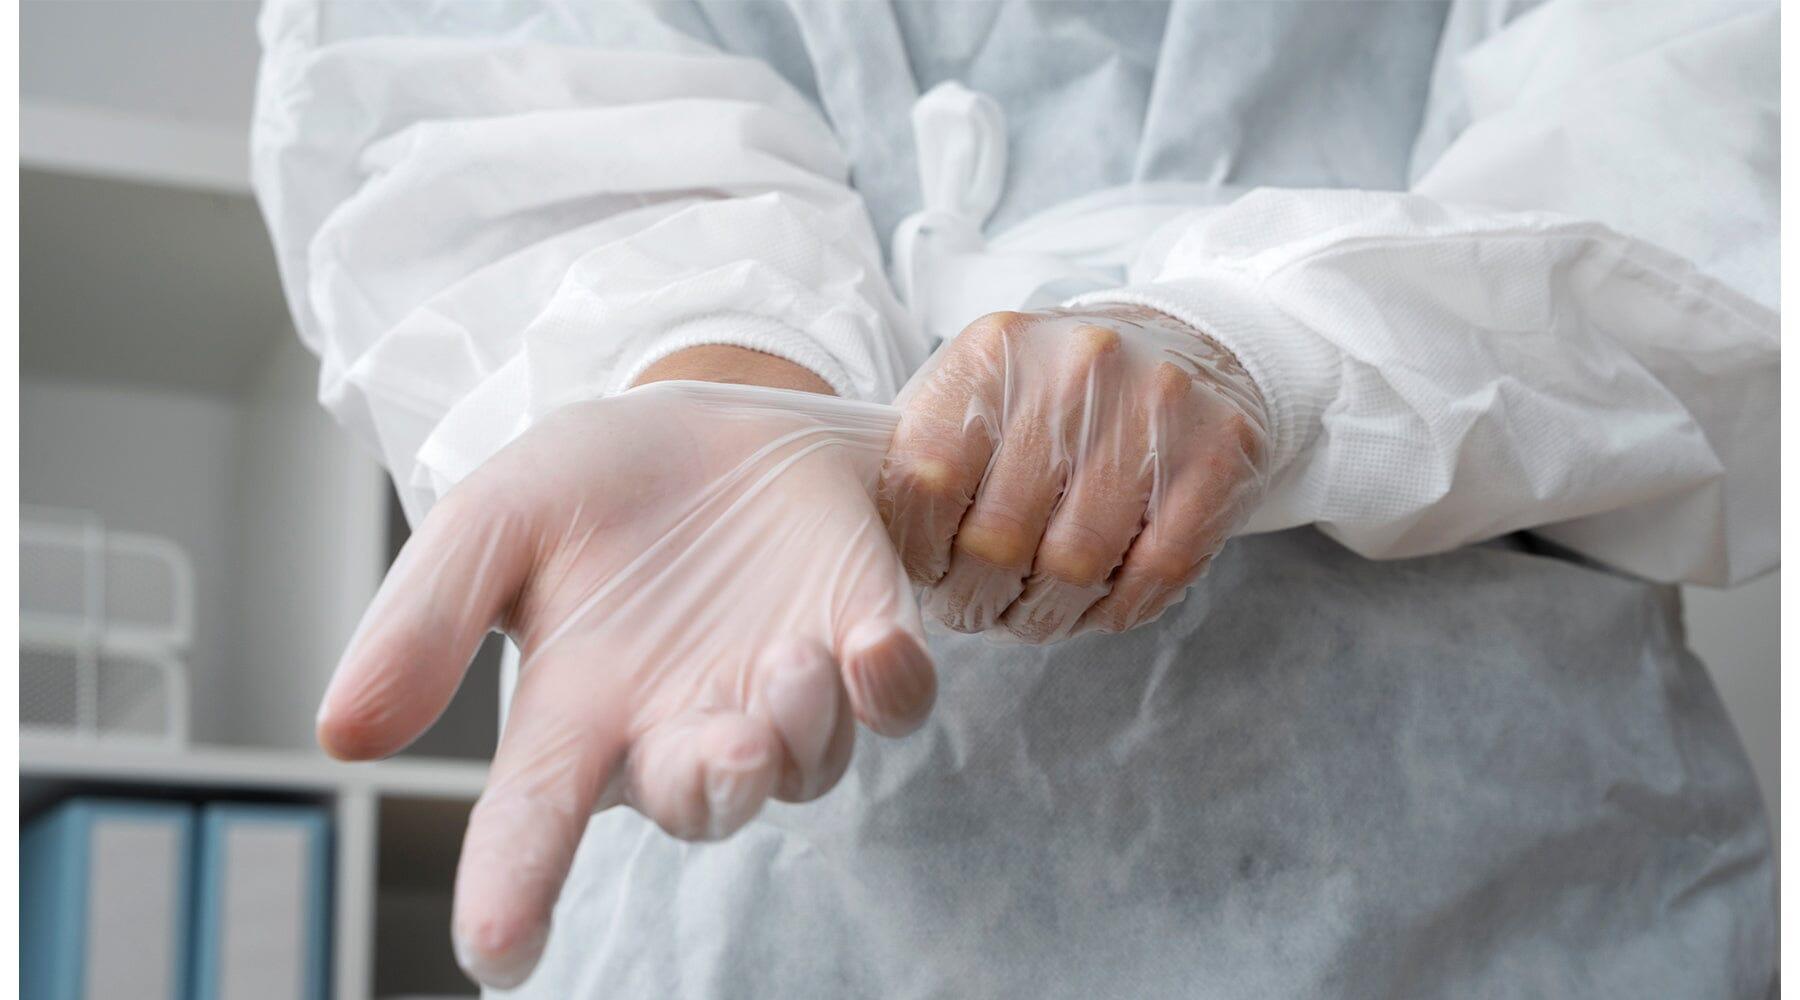 How Polyethylene Gloves Are Made